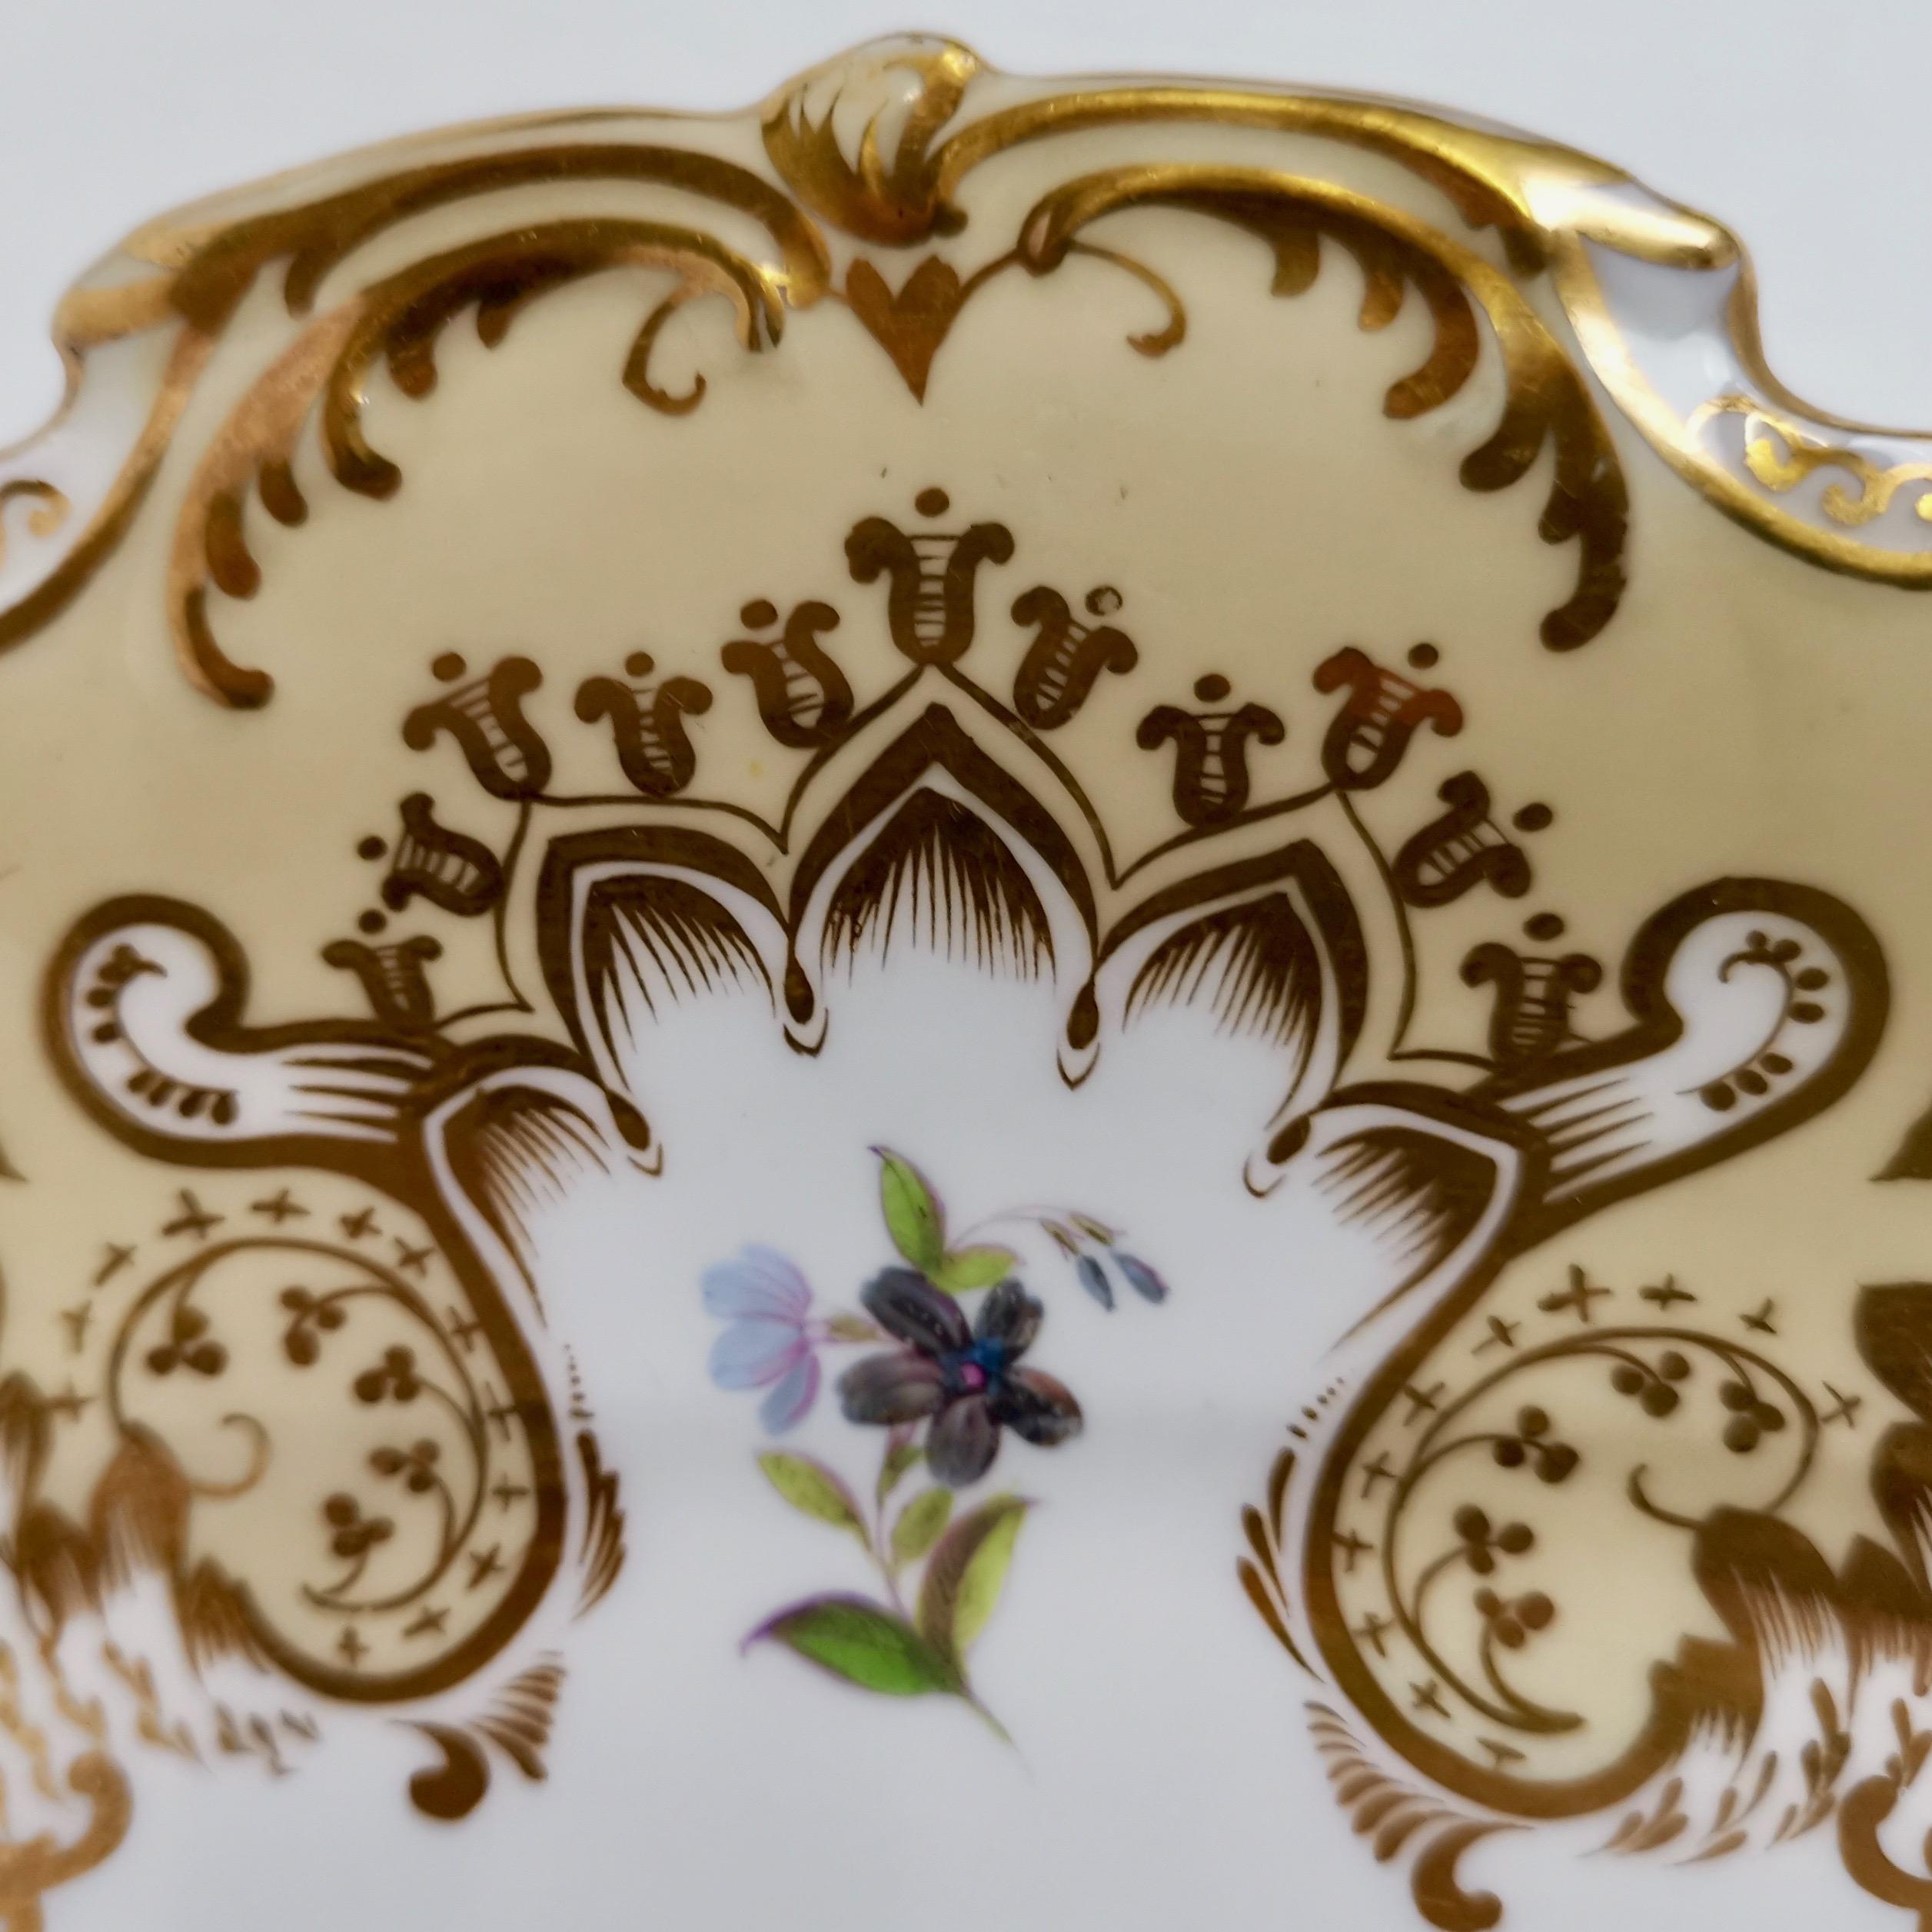 Coalport Porcelain Cake Plate, Beige and Gilt, Flowers by Thomas Dixon, 1837 1